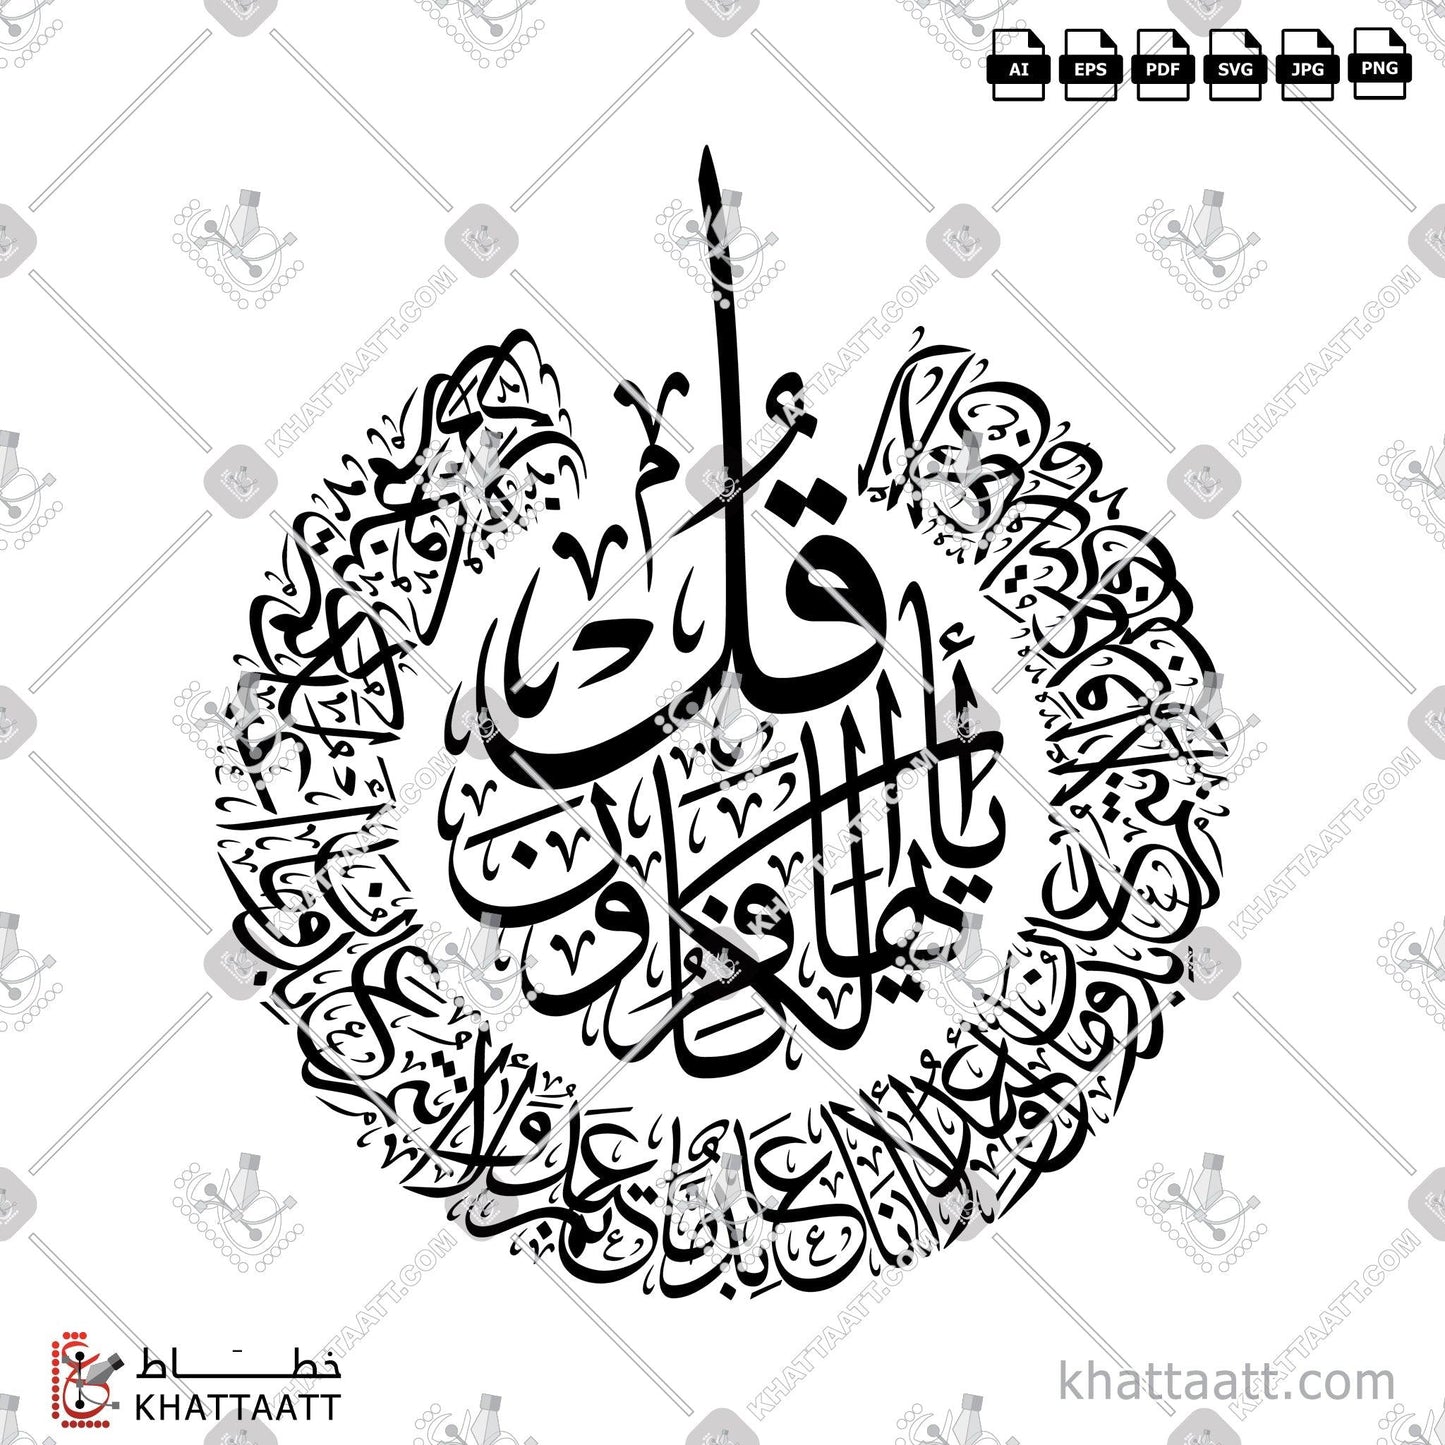 Download Arabic Calligraphy of Surat Al-Kafirun - سورة الكافرون in Thuluth - خط الثلث in vector and .png